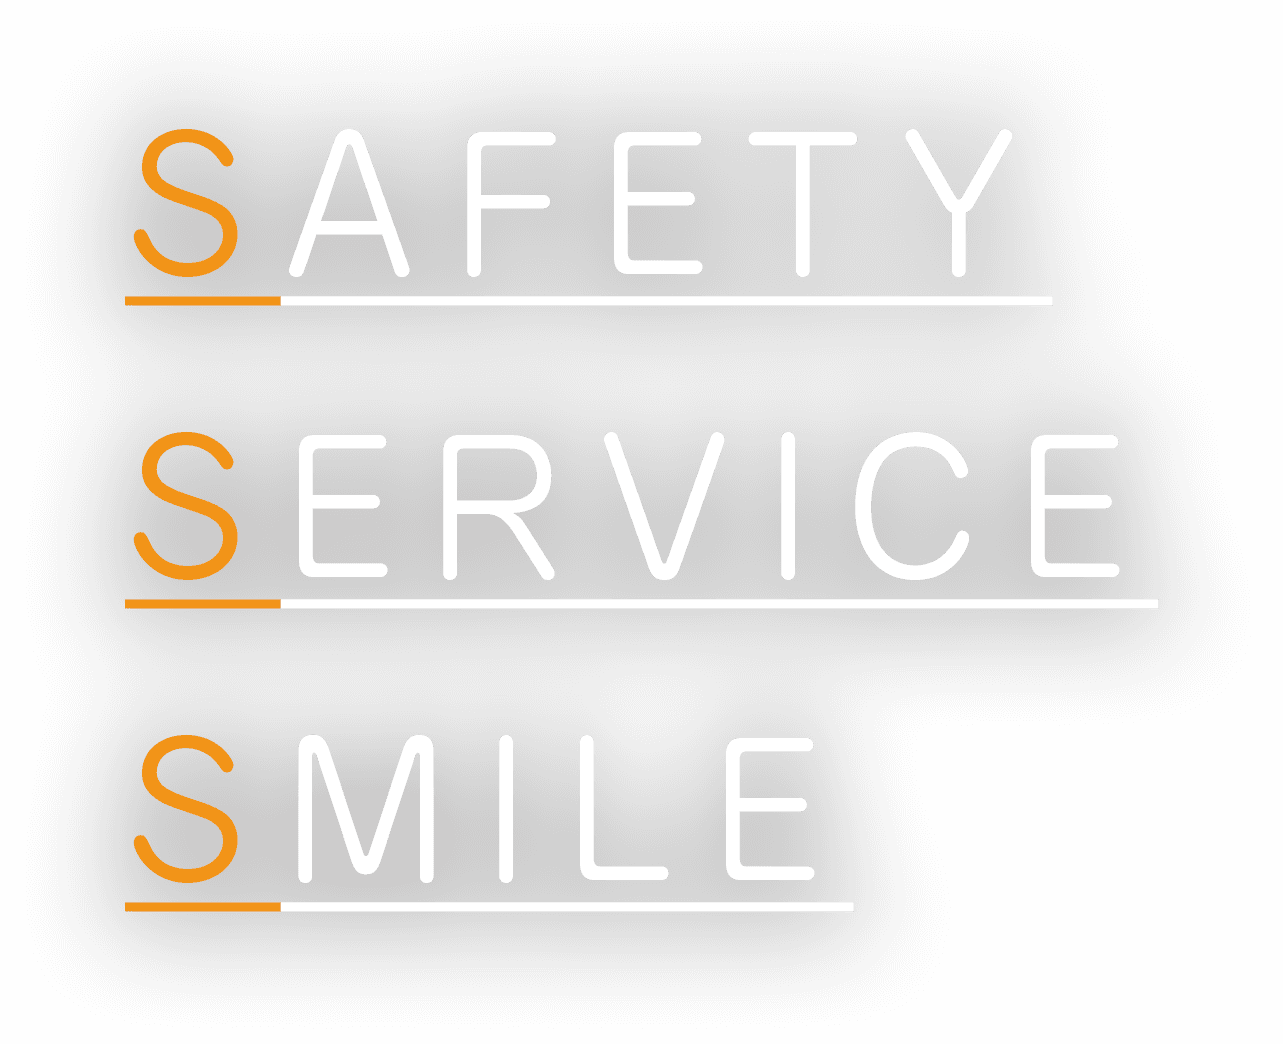 SAFETY SERVICE SMILE